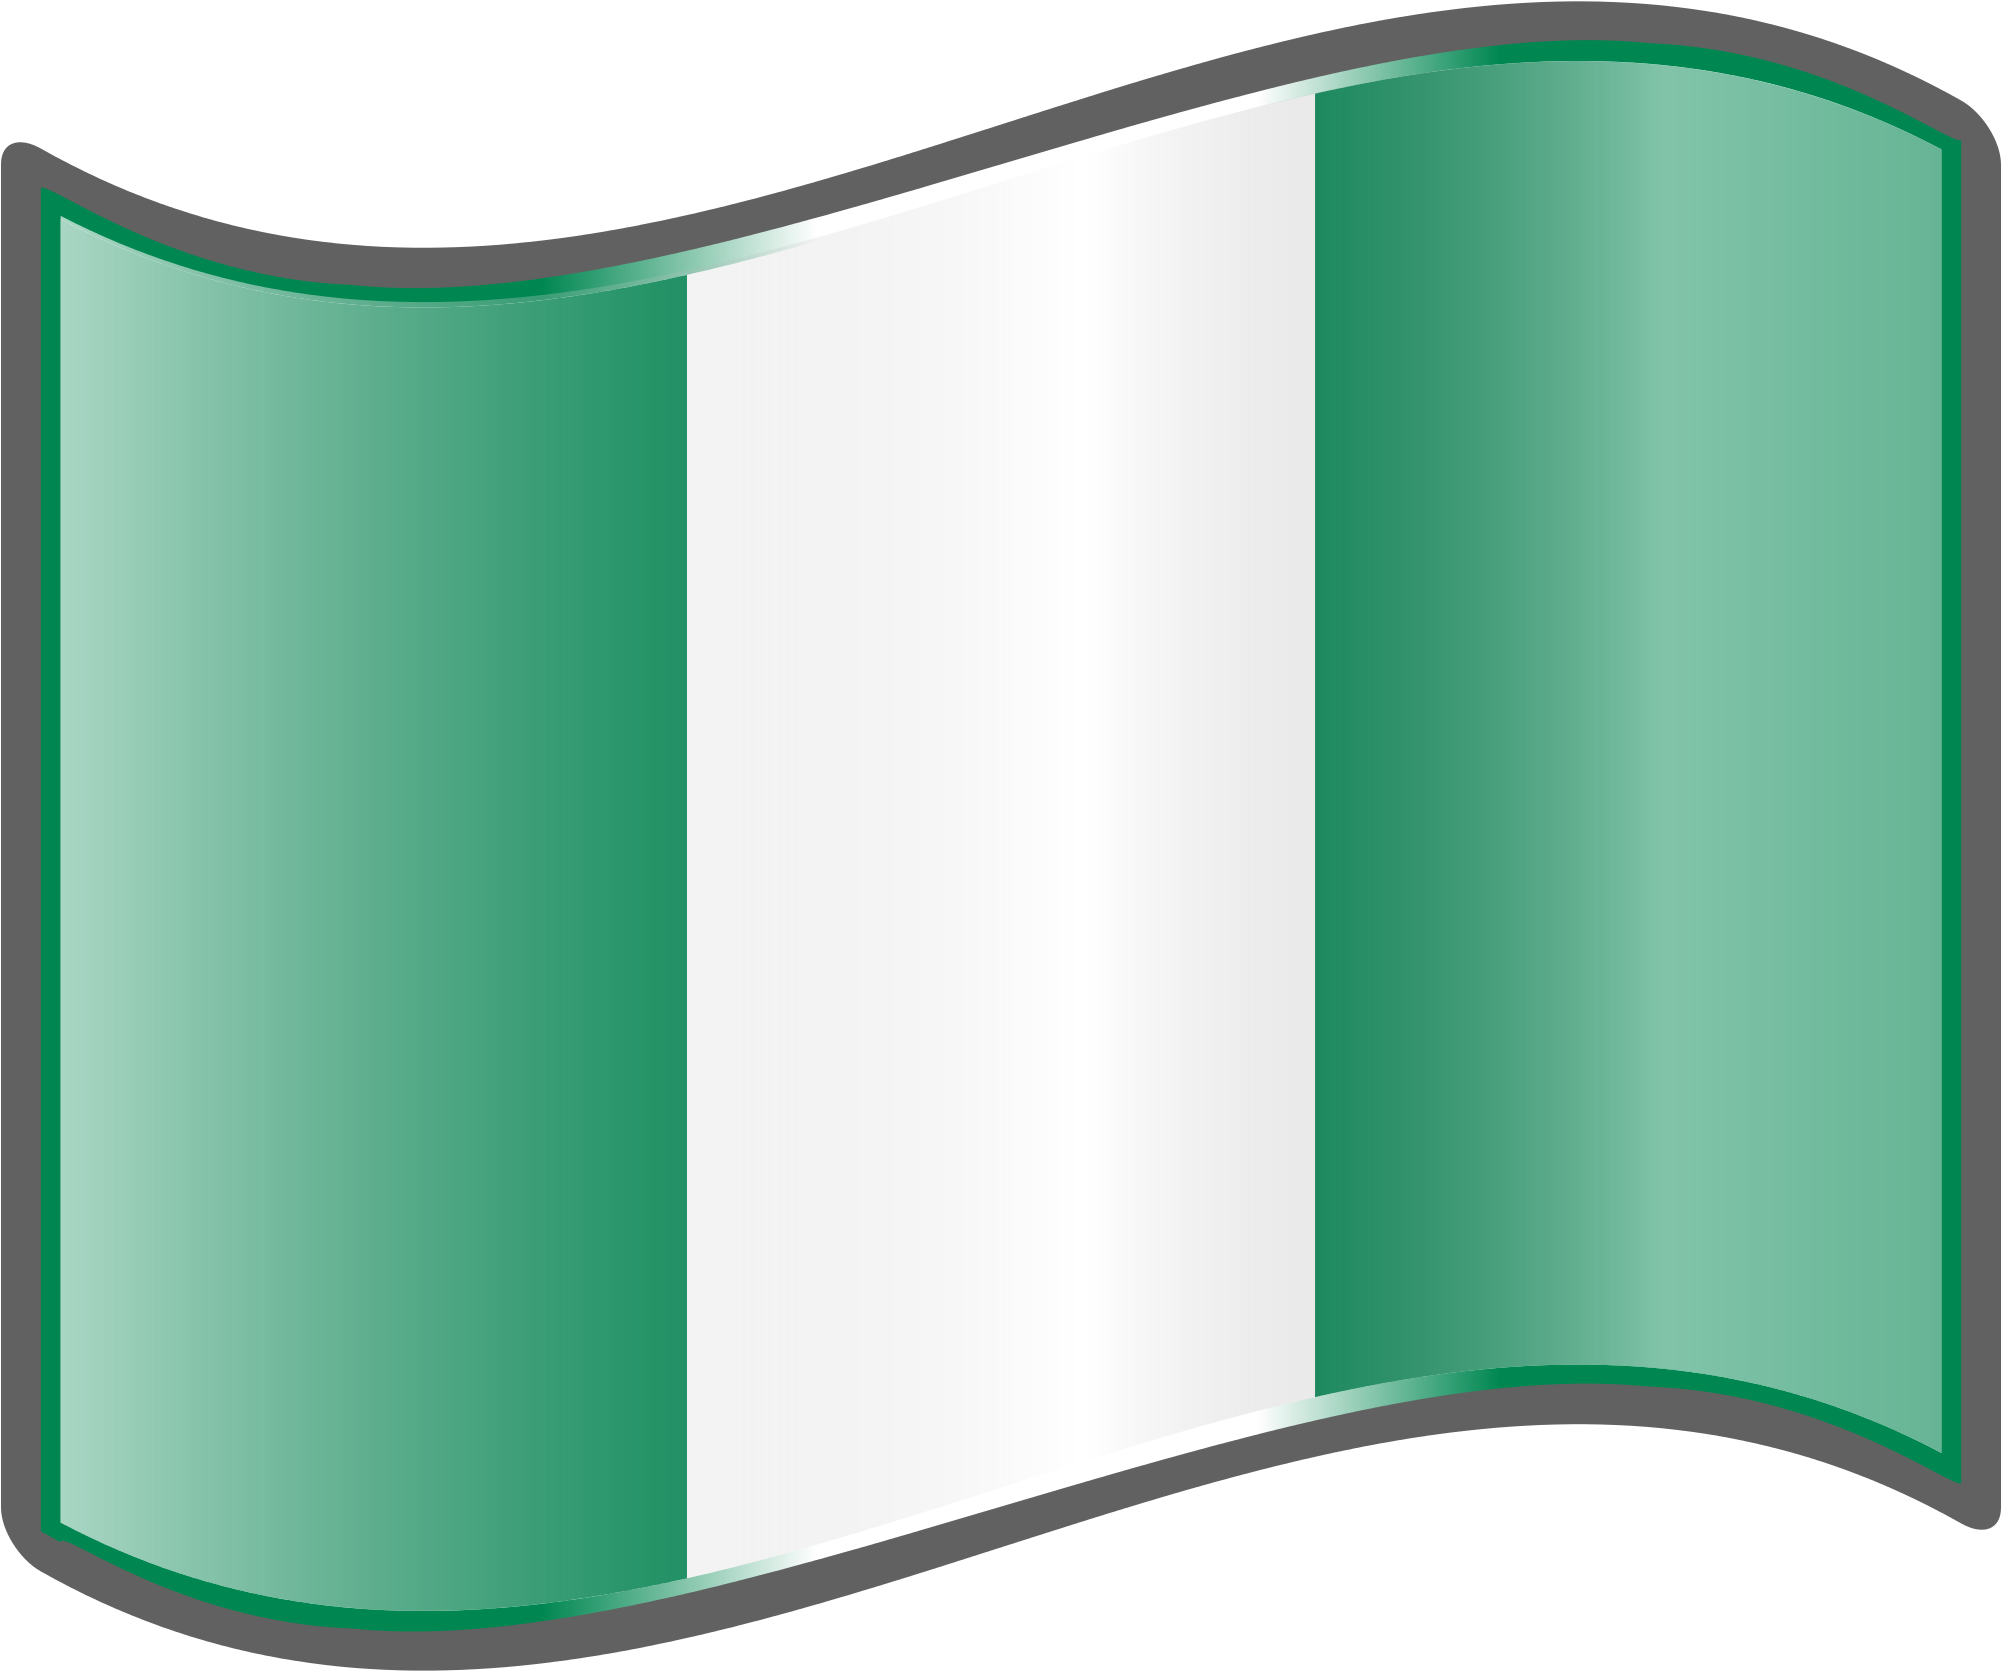 Nigeria Flag Download PNG Image